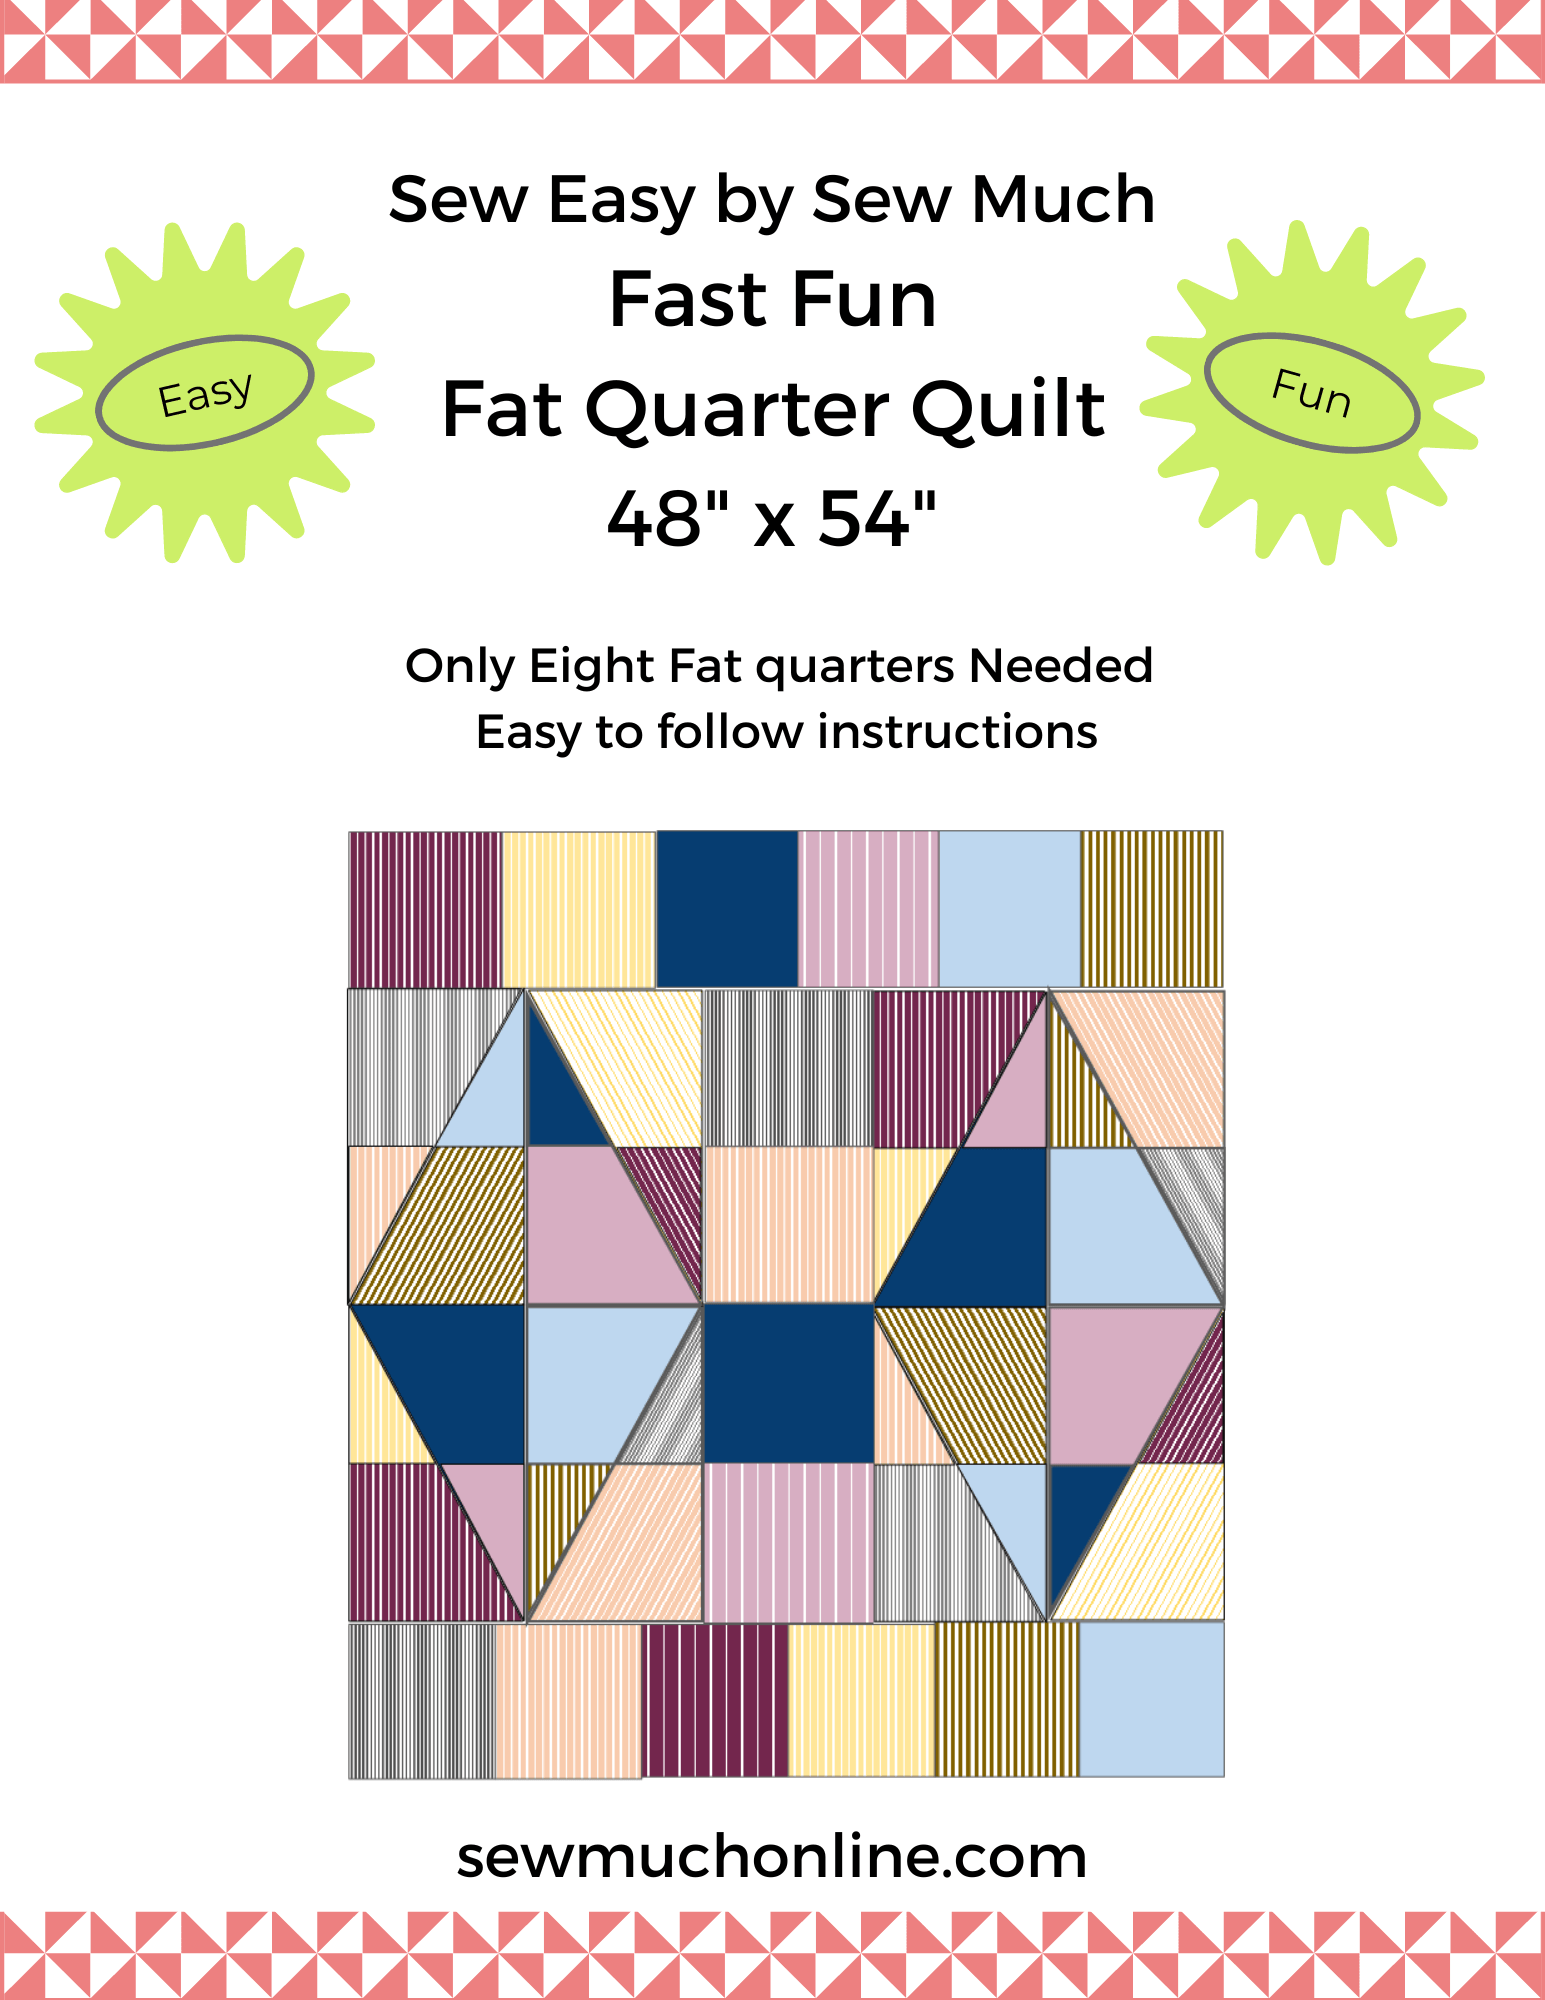 Fast Fun Fat Quarter Quilt Pattern - Sew Much